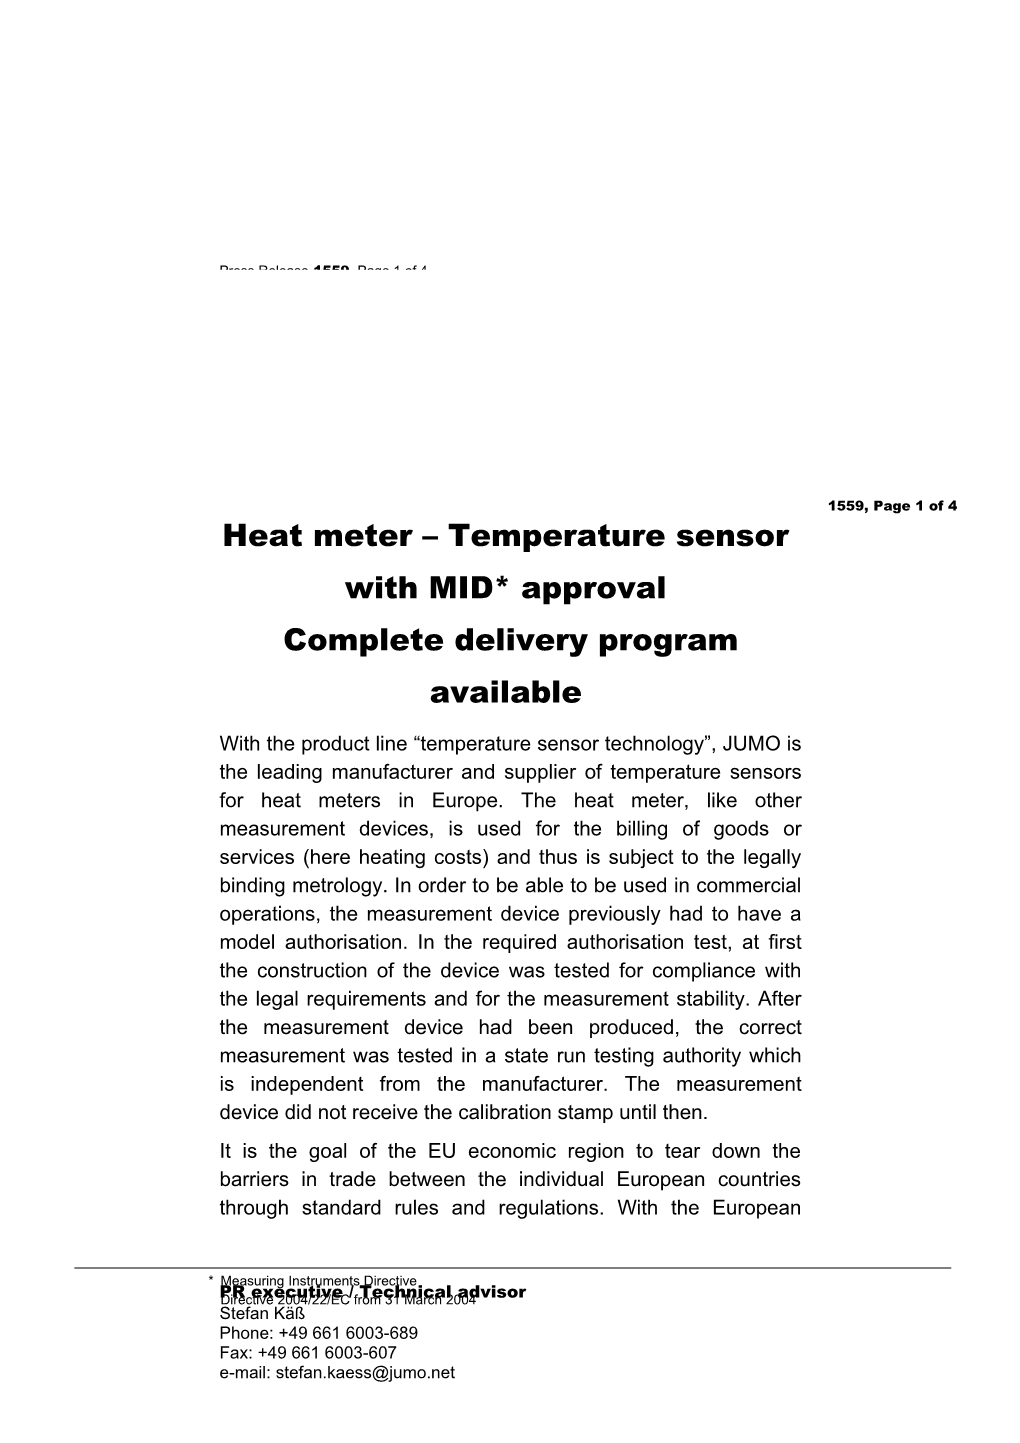 Heat Meter Temperature Sensor